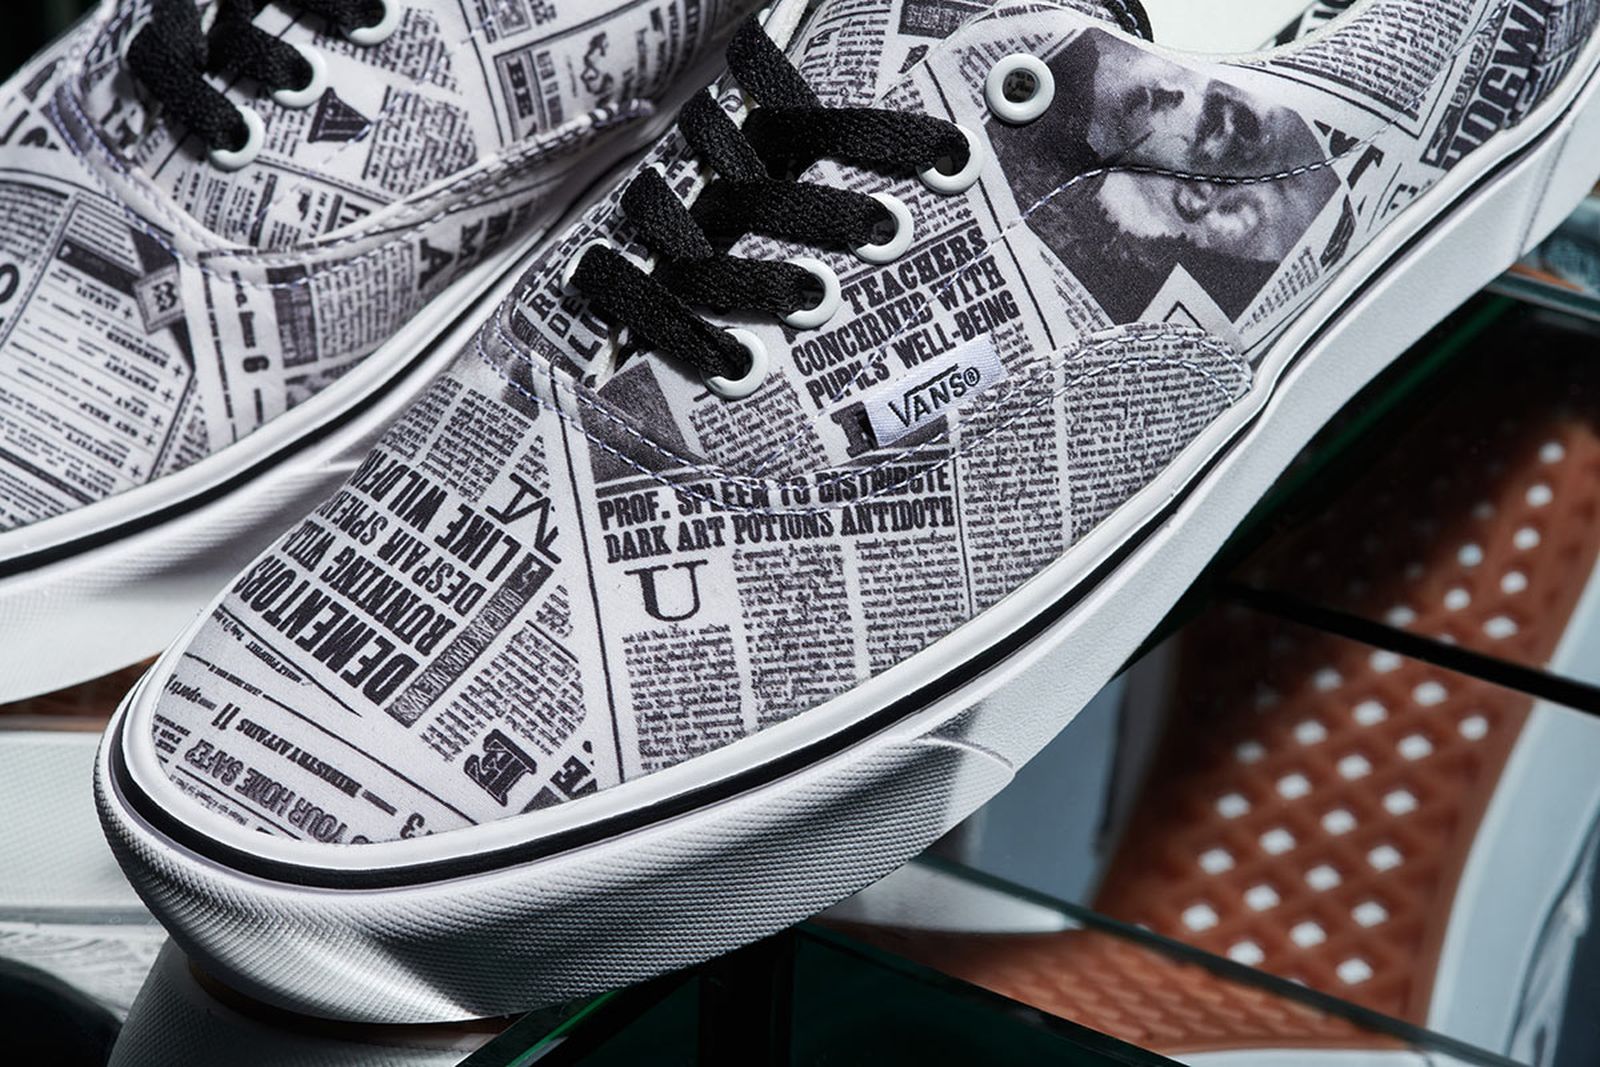 Harry Potter x Vans Sneakers: Release Date, Pricing & More Info